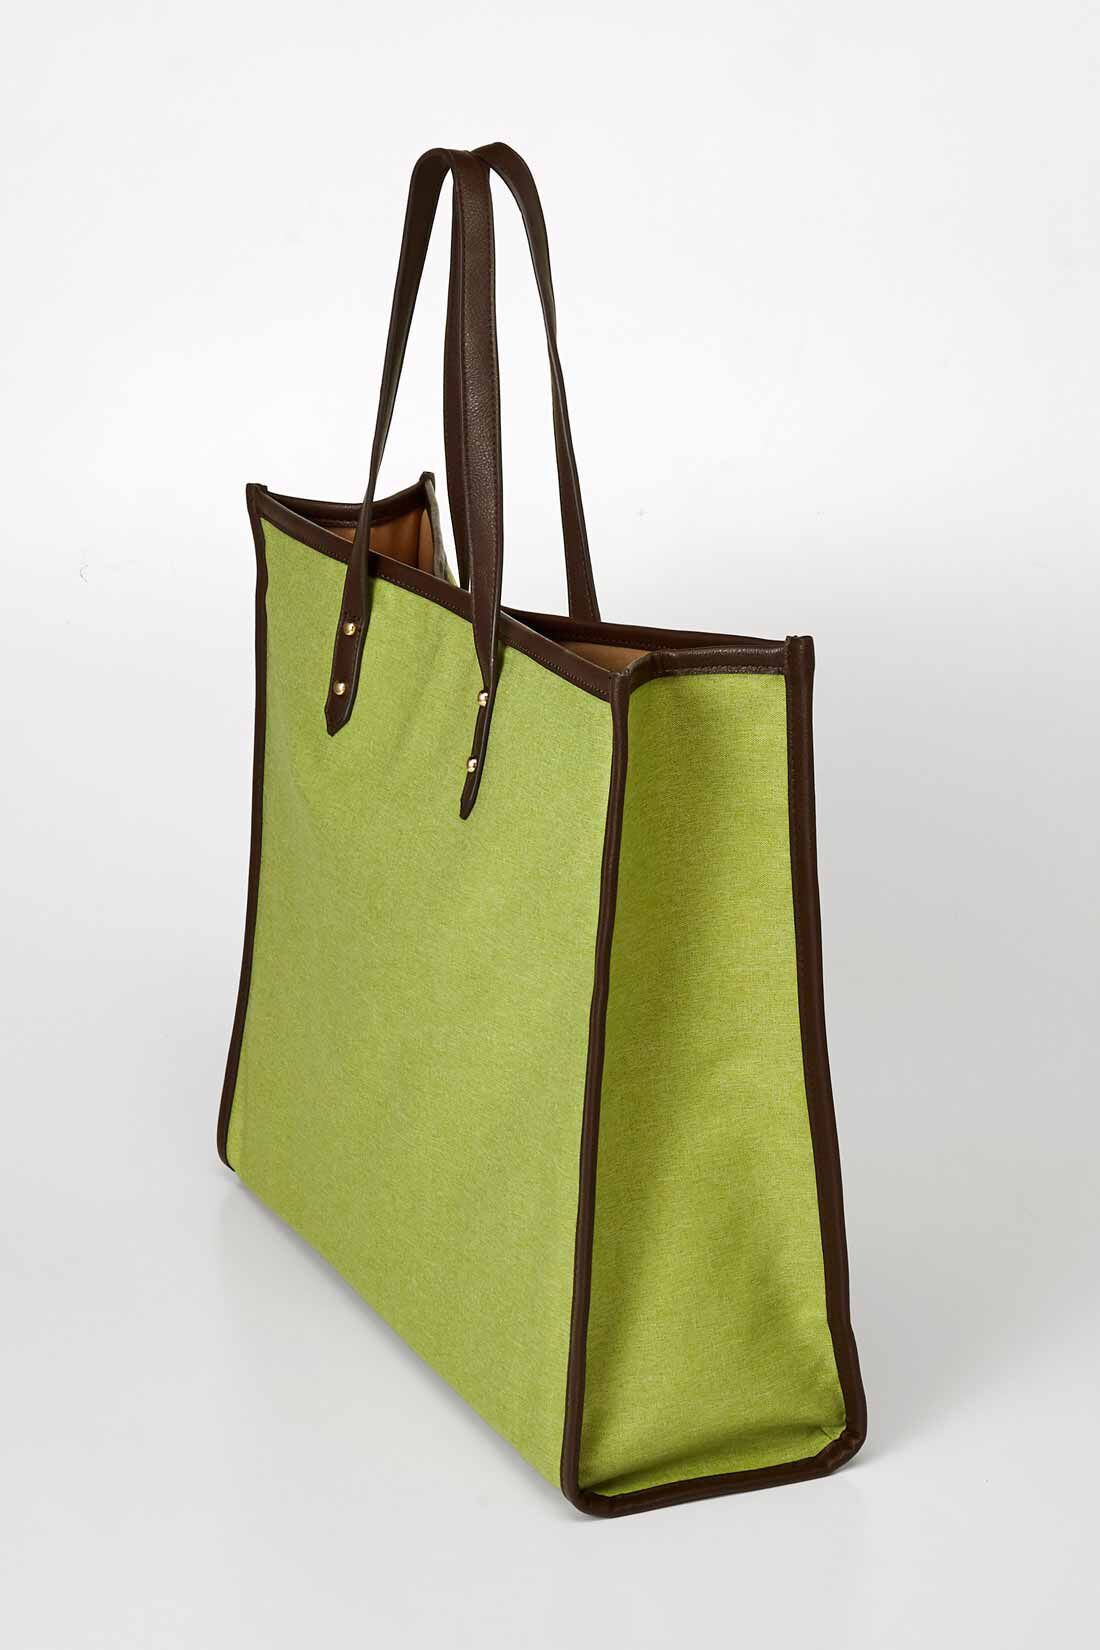 Real Stock|OSYAIRO ジャンボうちわが入るパイピングトートバッグ〈グリーン〉|まちもたっぷりなので、大容量。